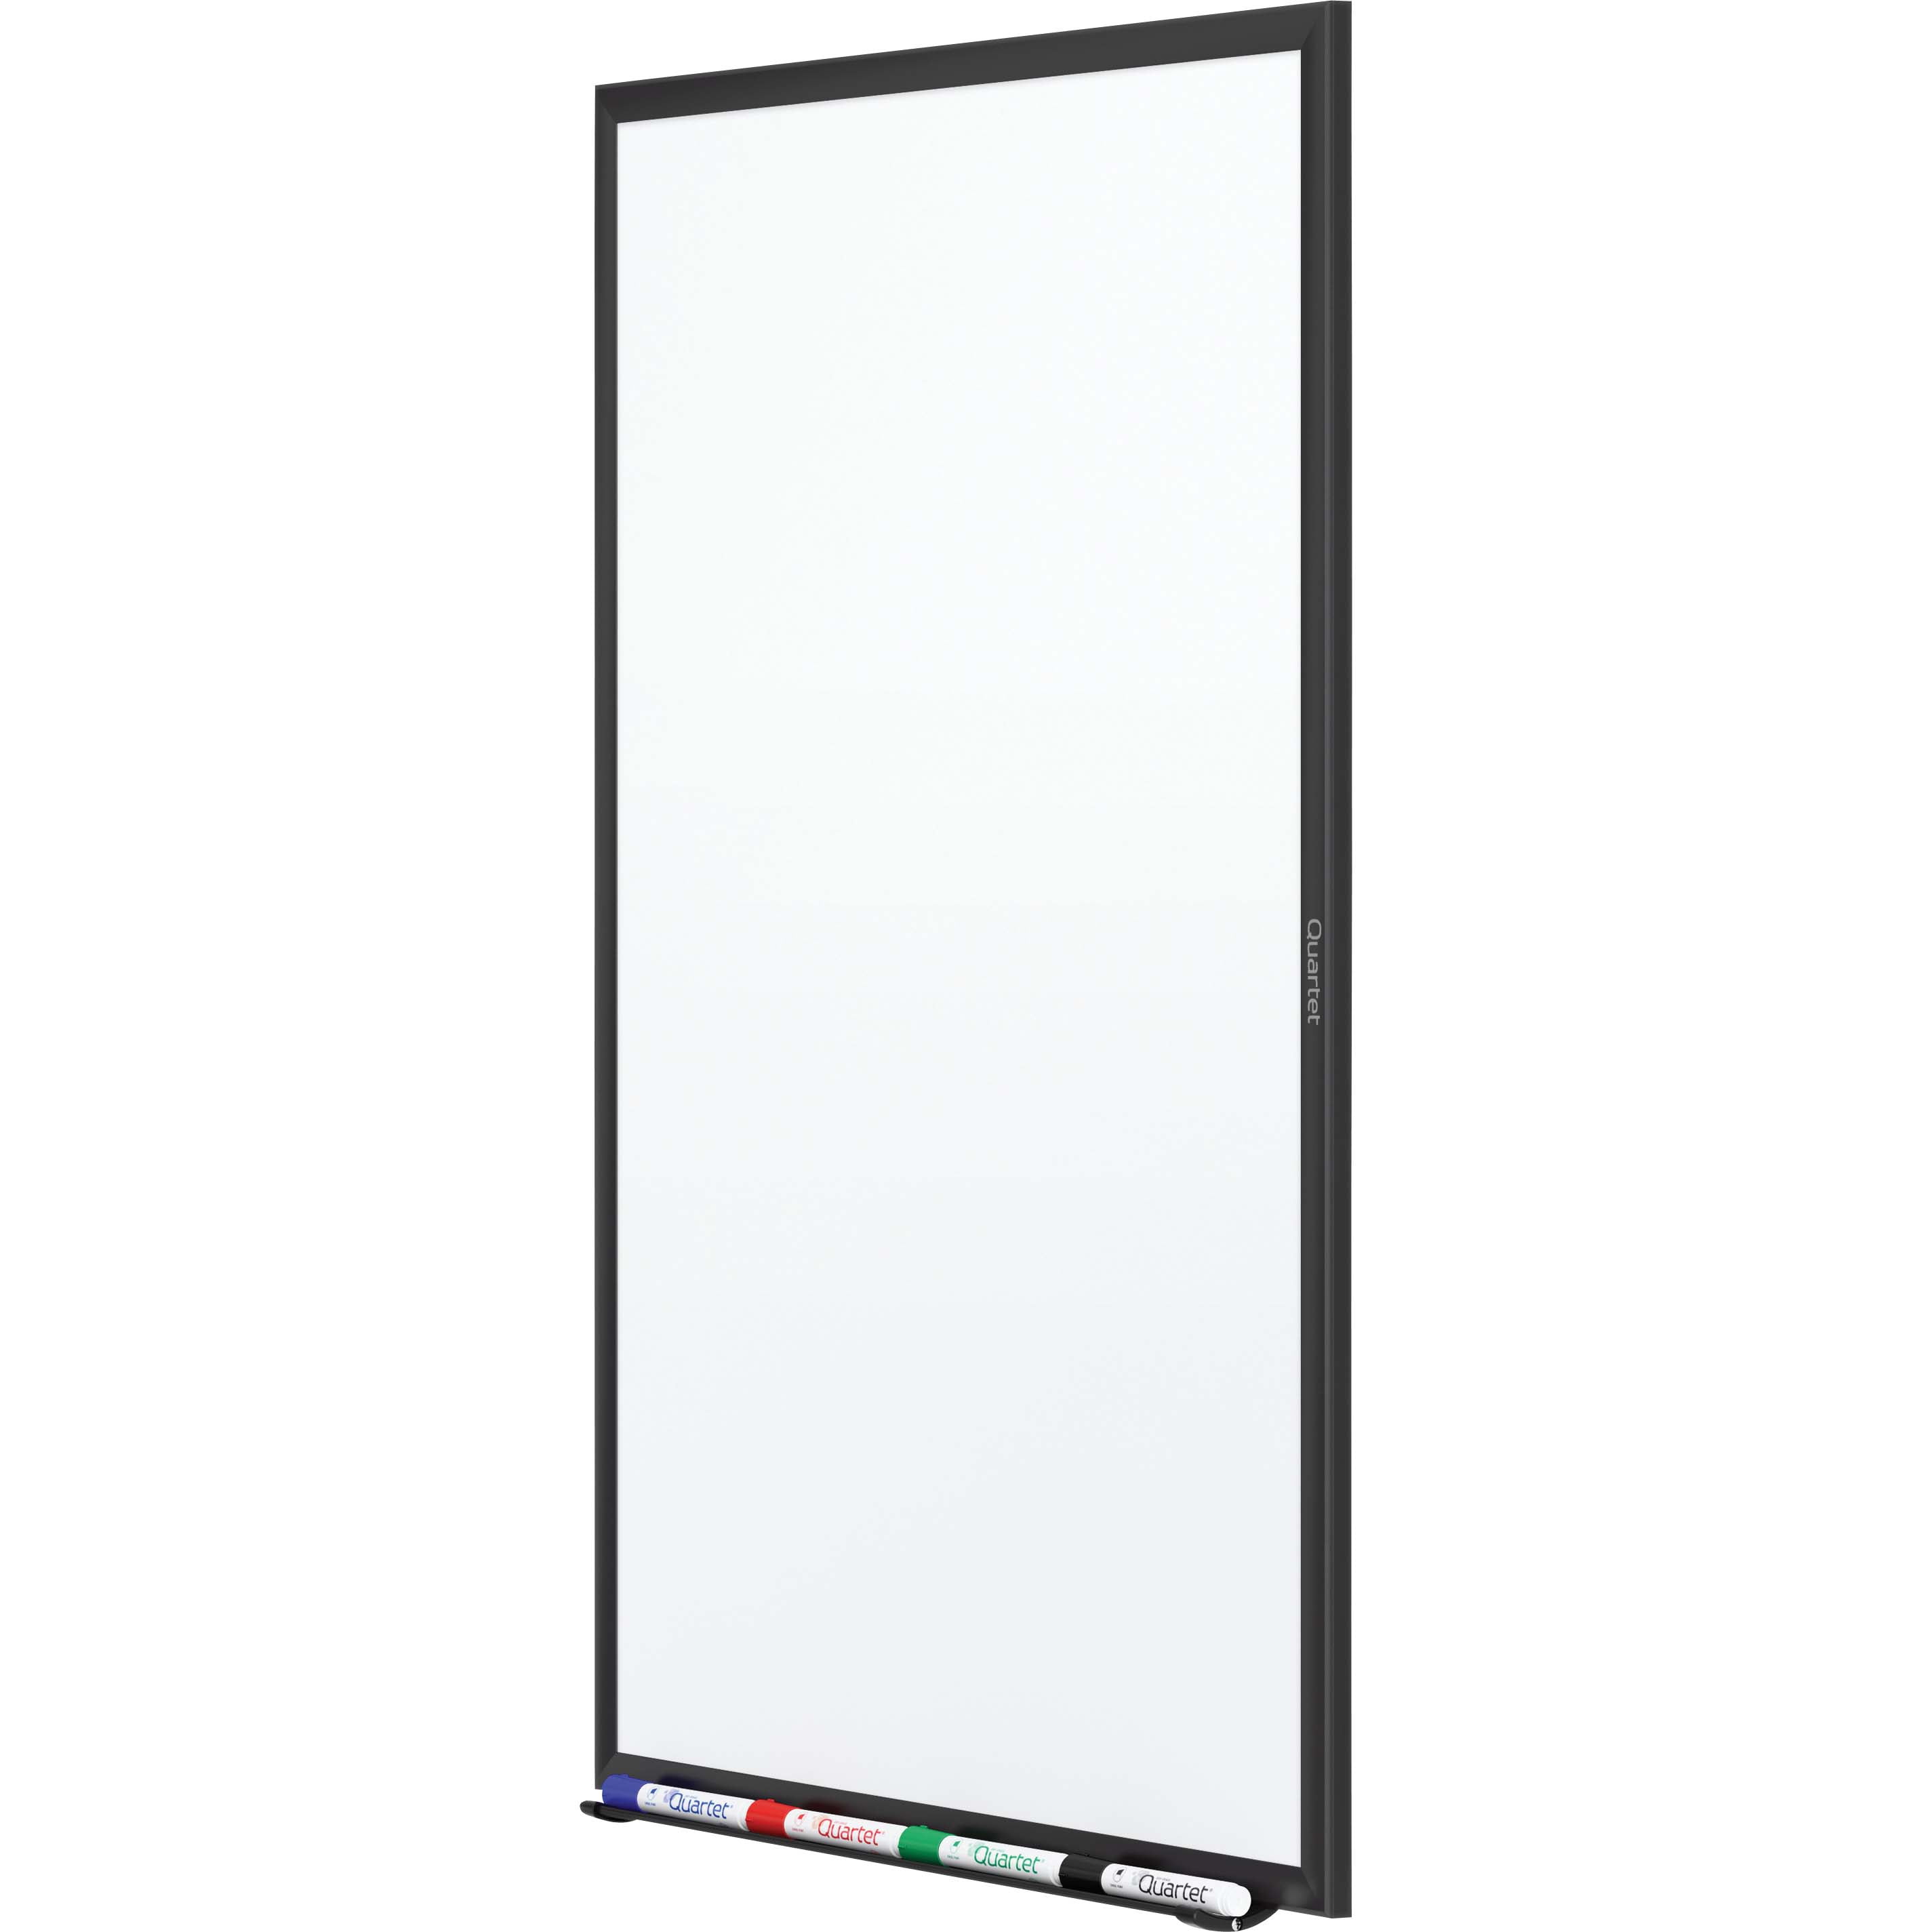 Quartet Standard Magnetic Whiteboard for sale online SM534 4 x 3 Feet Silver Aluminum Frame 